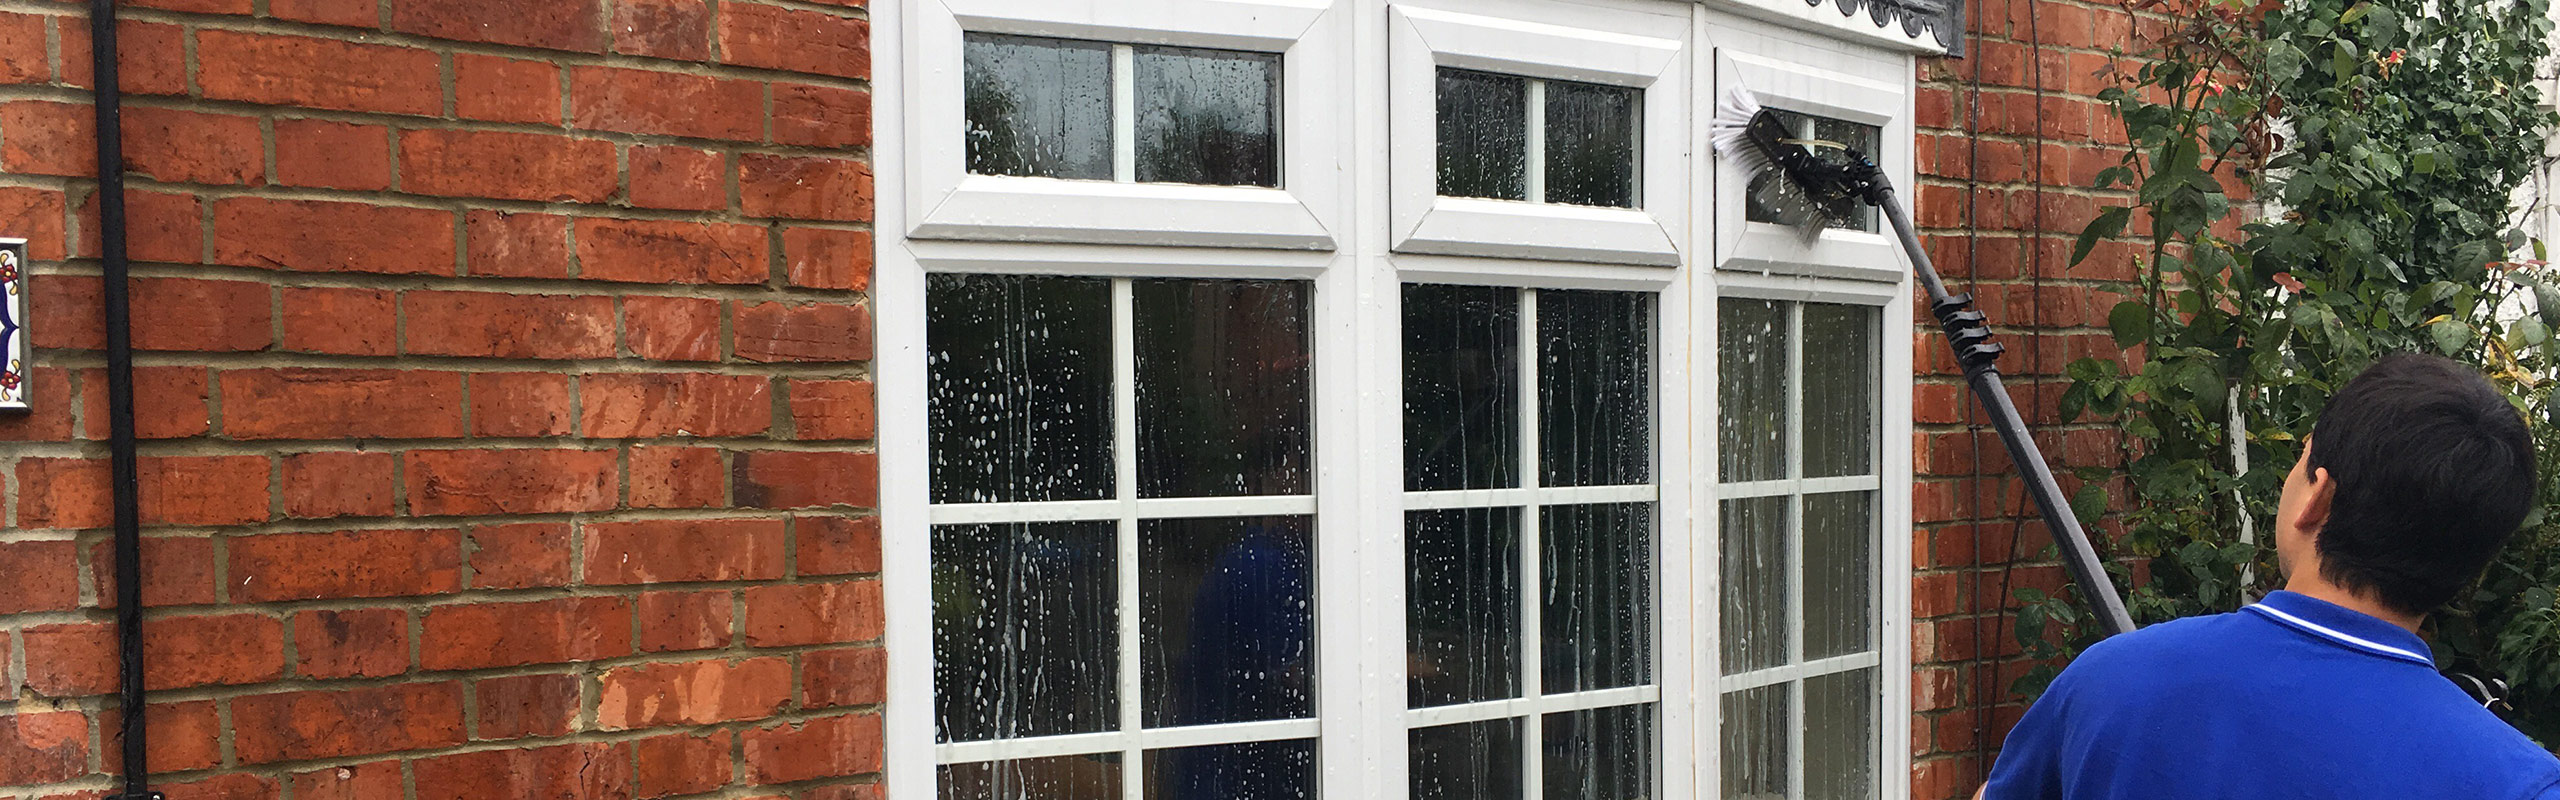 Window Cleaners Berkshire